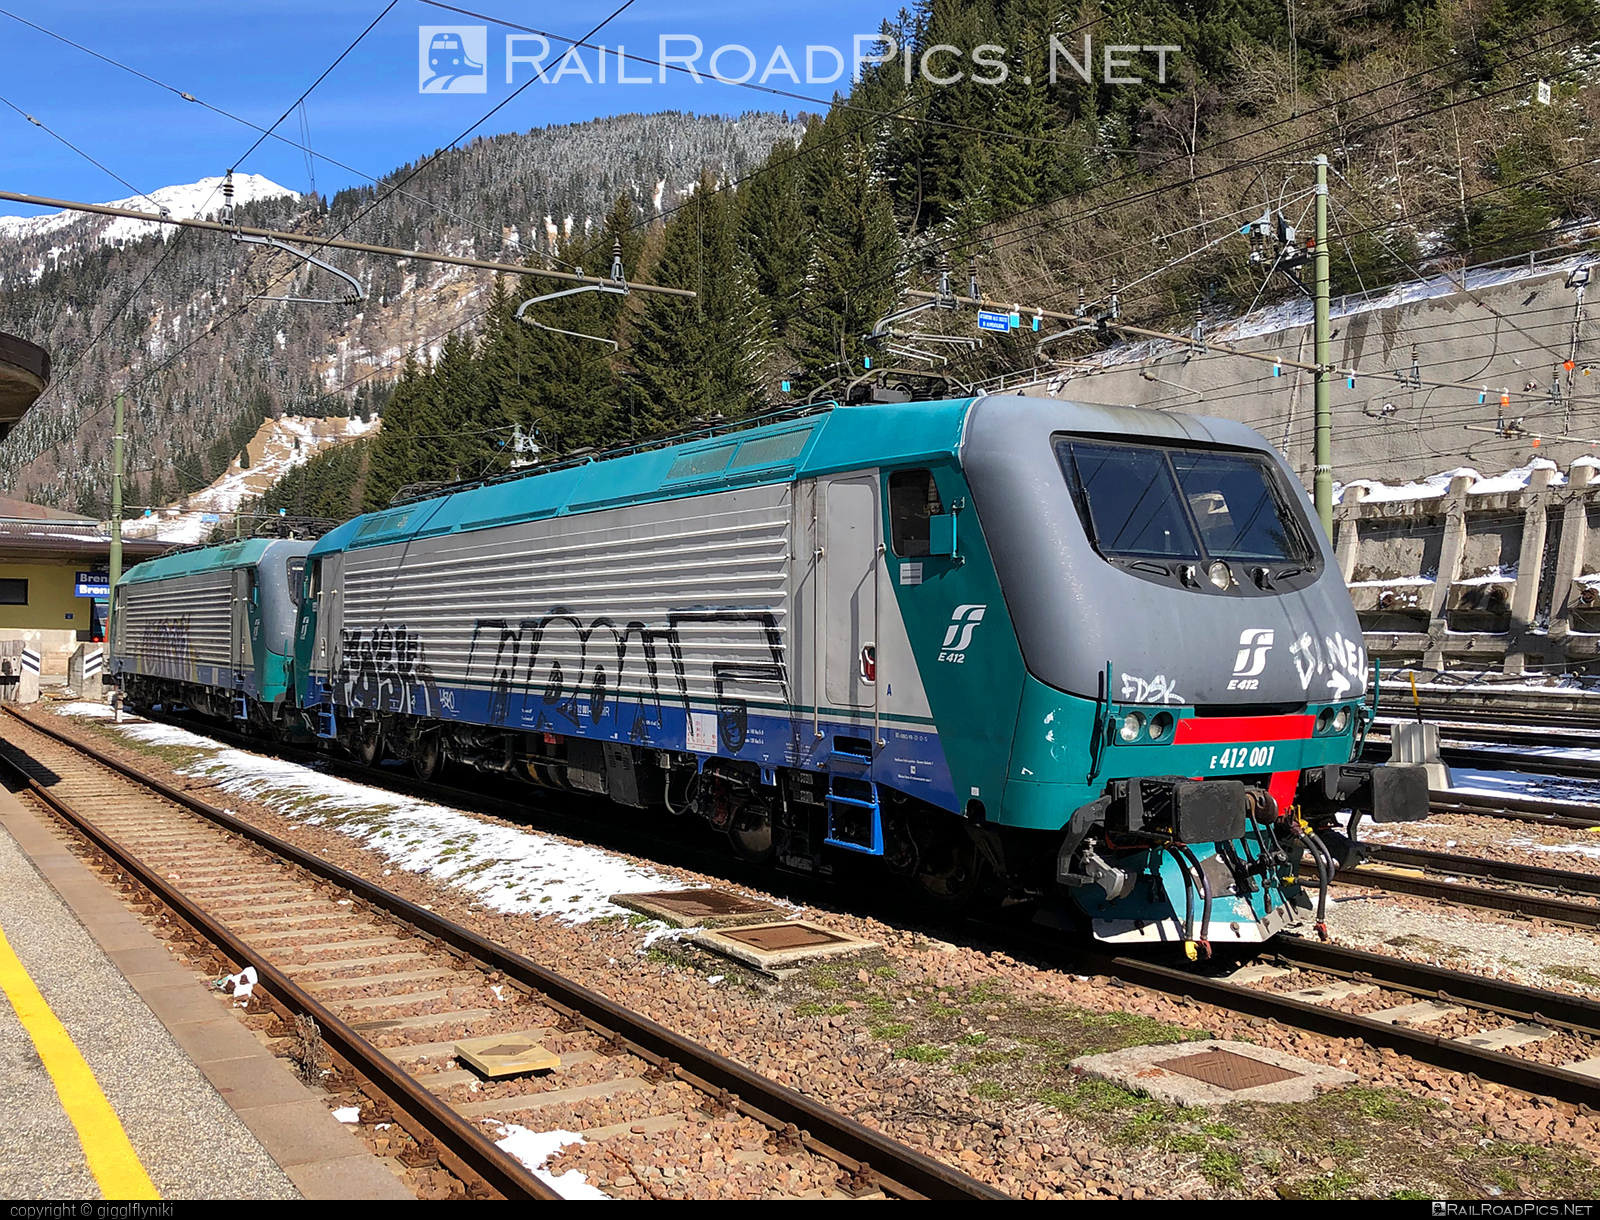 FS Class E.412 - E412 001 operated by Mercitalia Rail S.r.l. #e412 #ferroviedellostato #fs #fsClassE412 #fsitaliane #graffiti #mercitalia